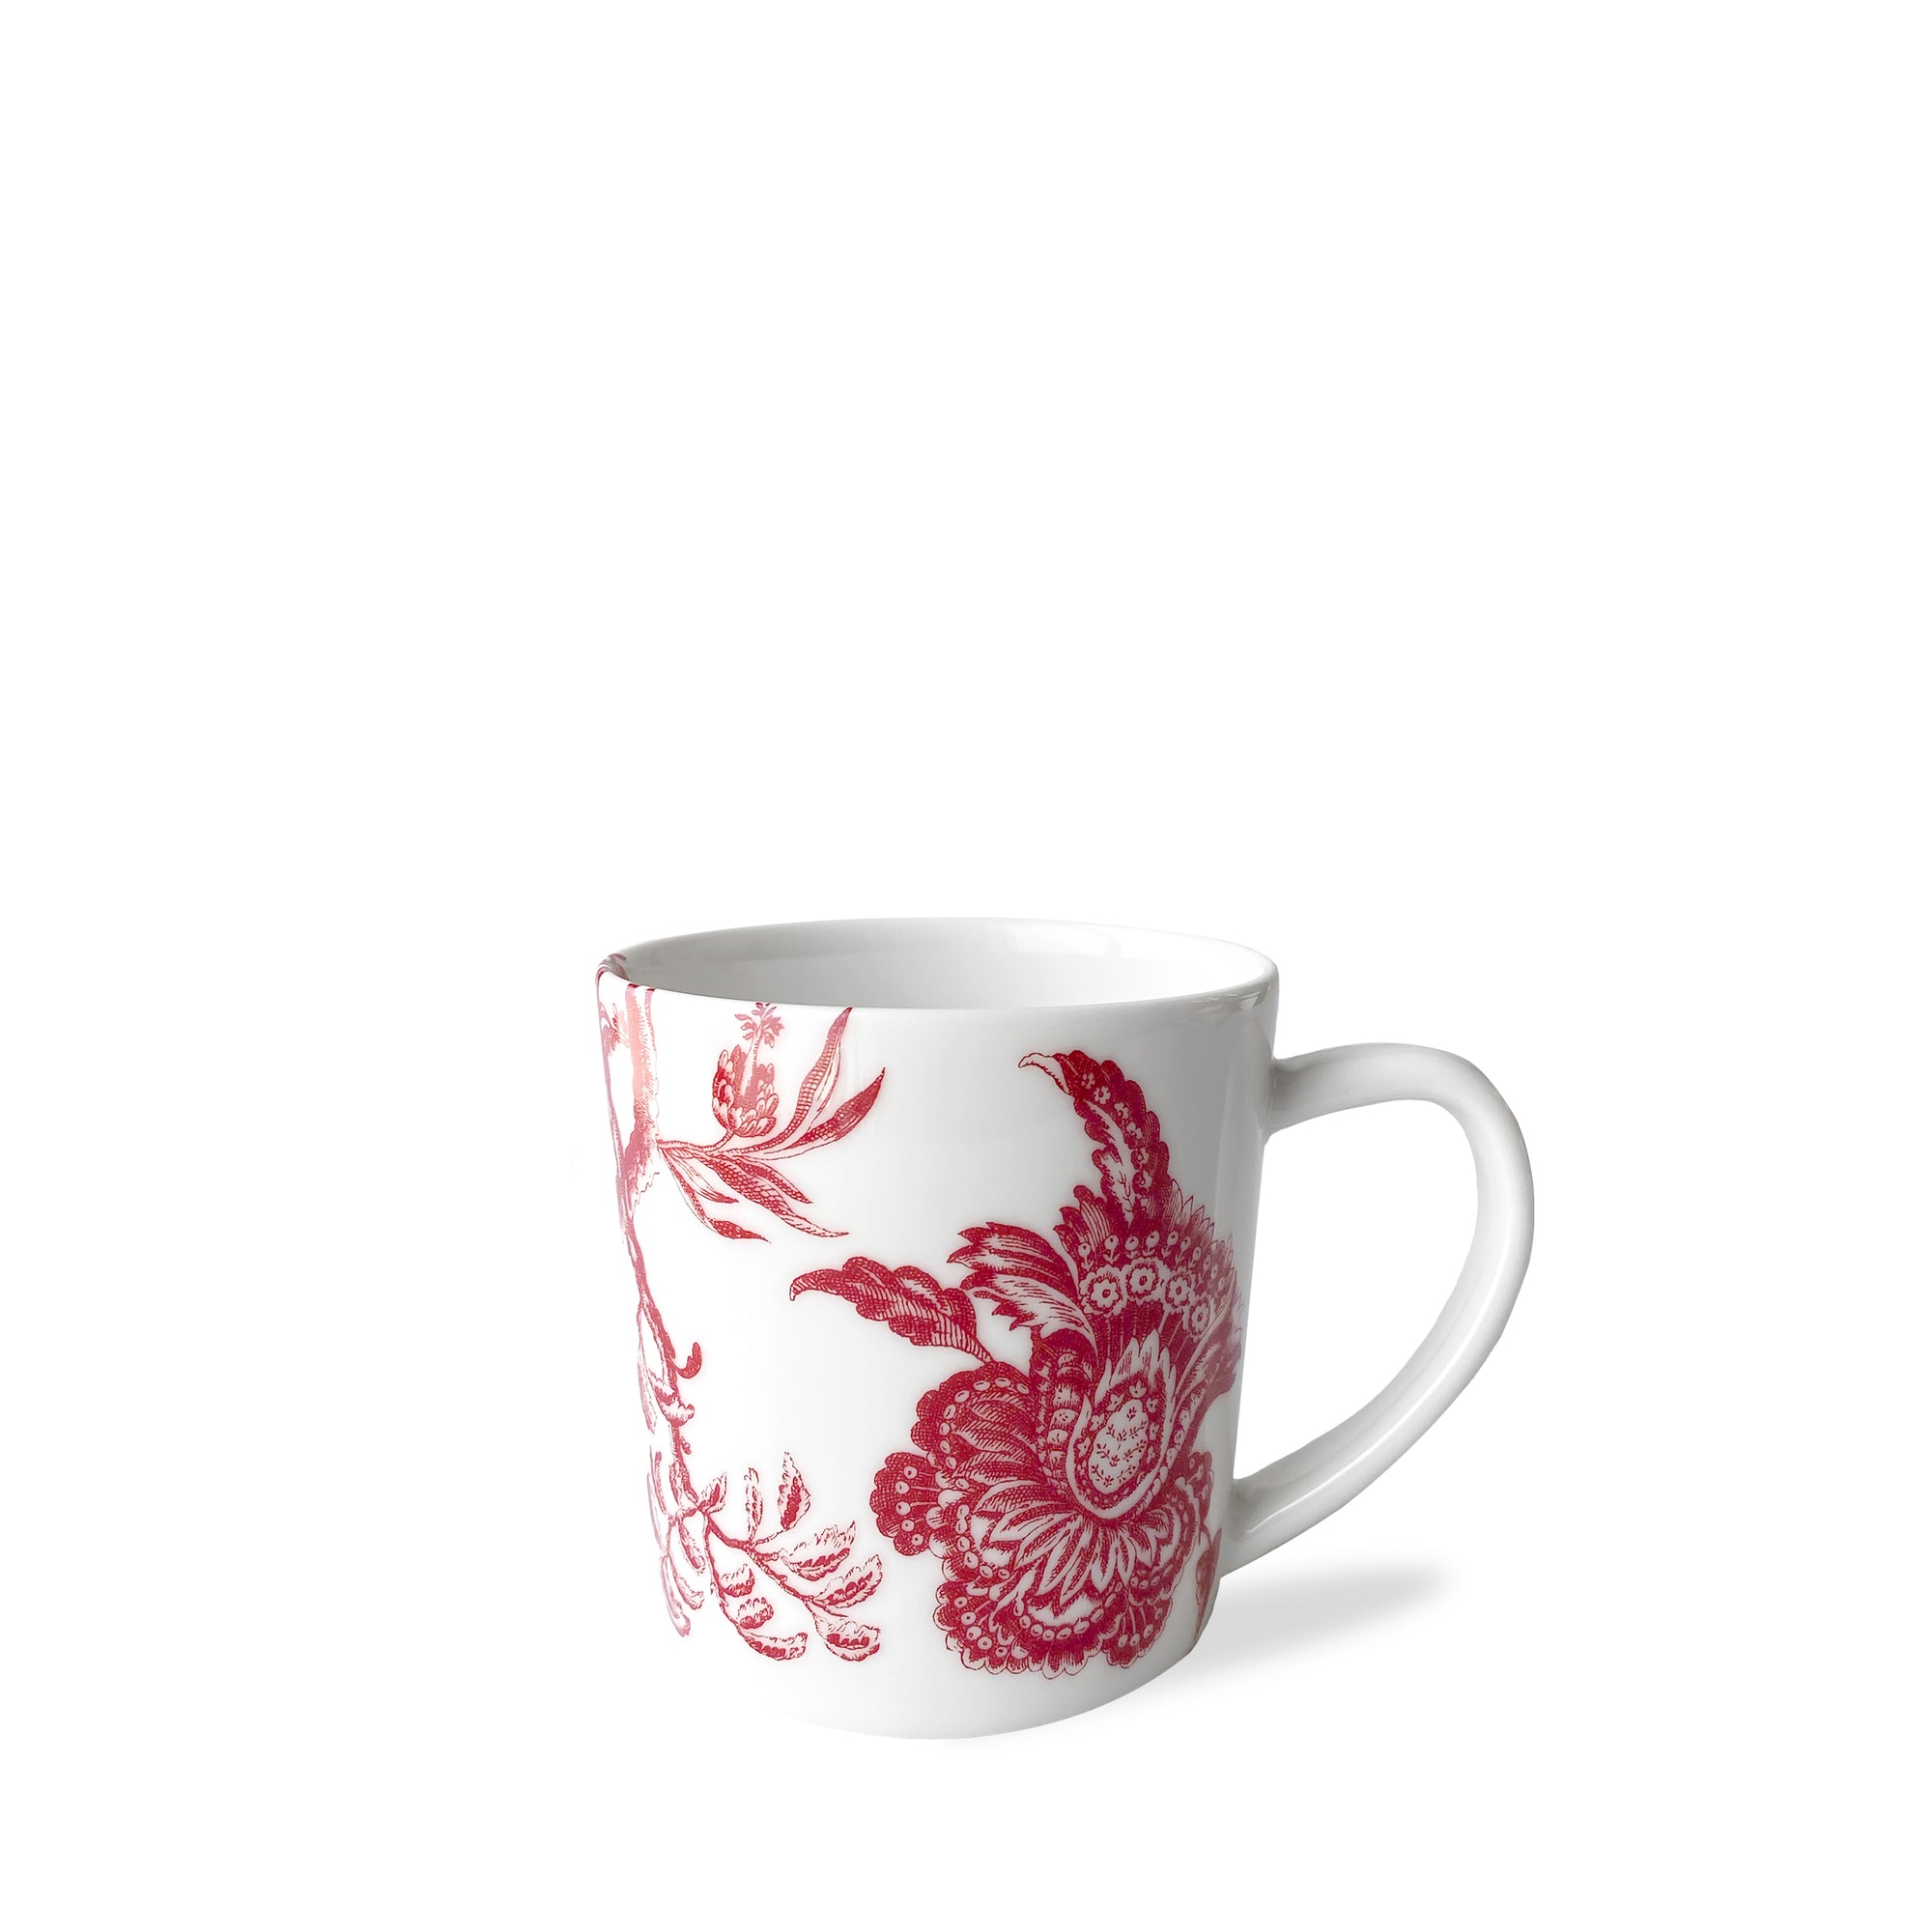 Arcadia Crimson red and white mug in high-fired porcelain from Caskata